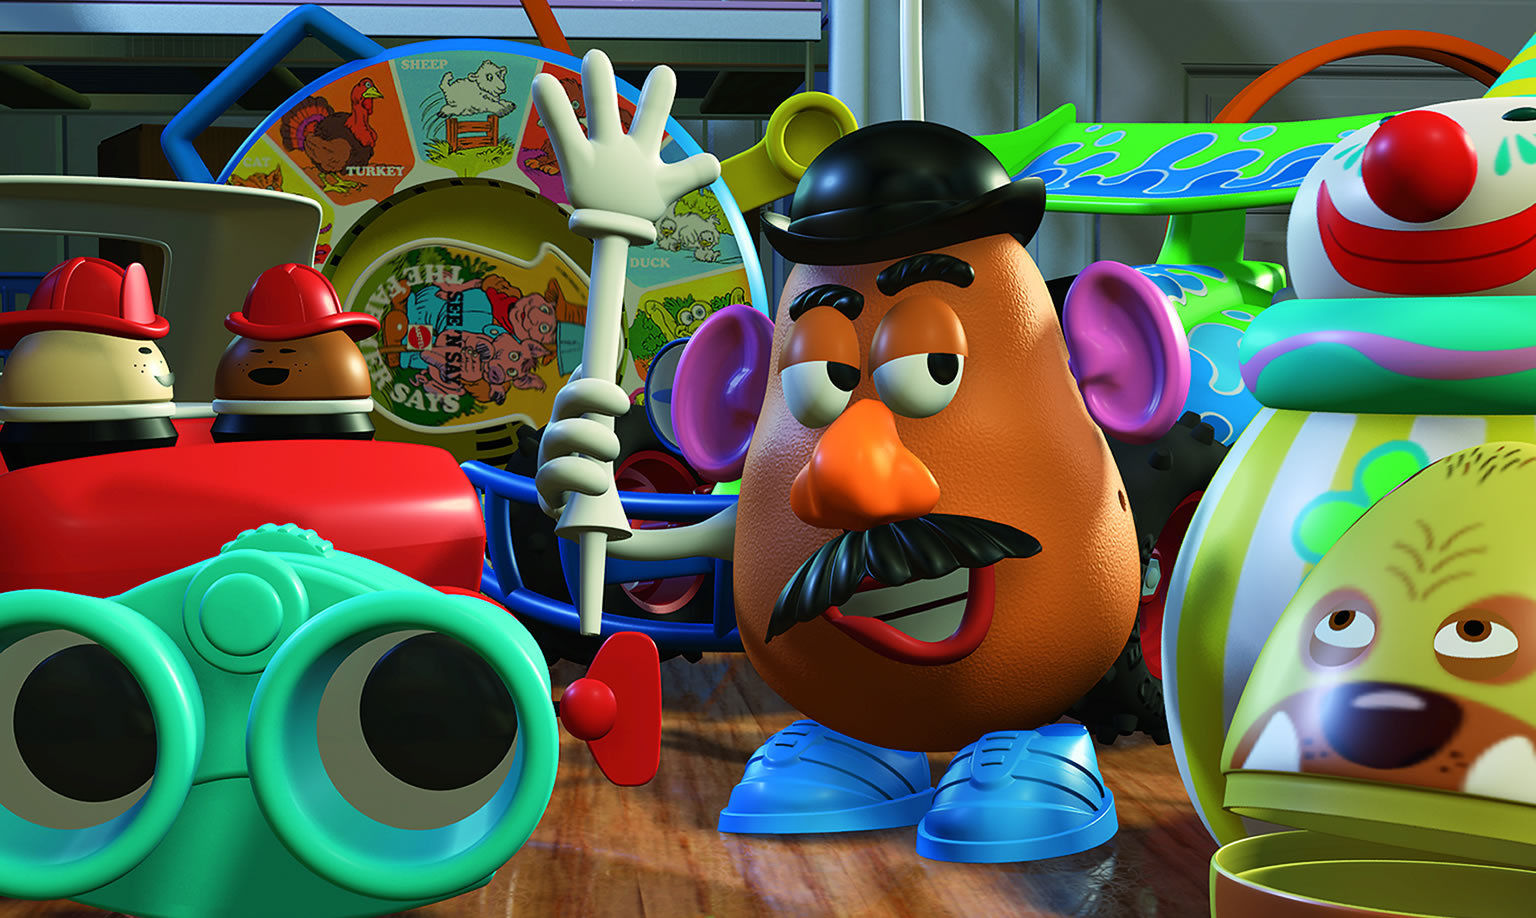 Mr. Potato Head in Toy Story 2